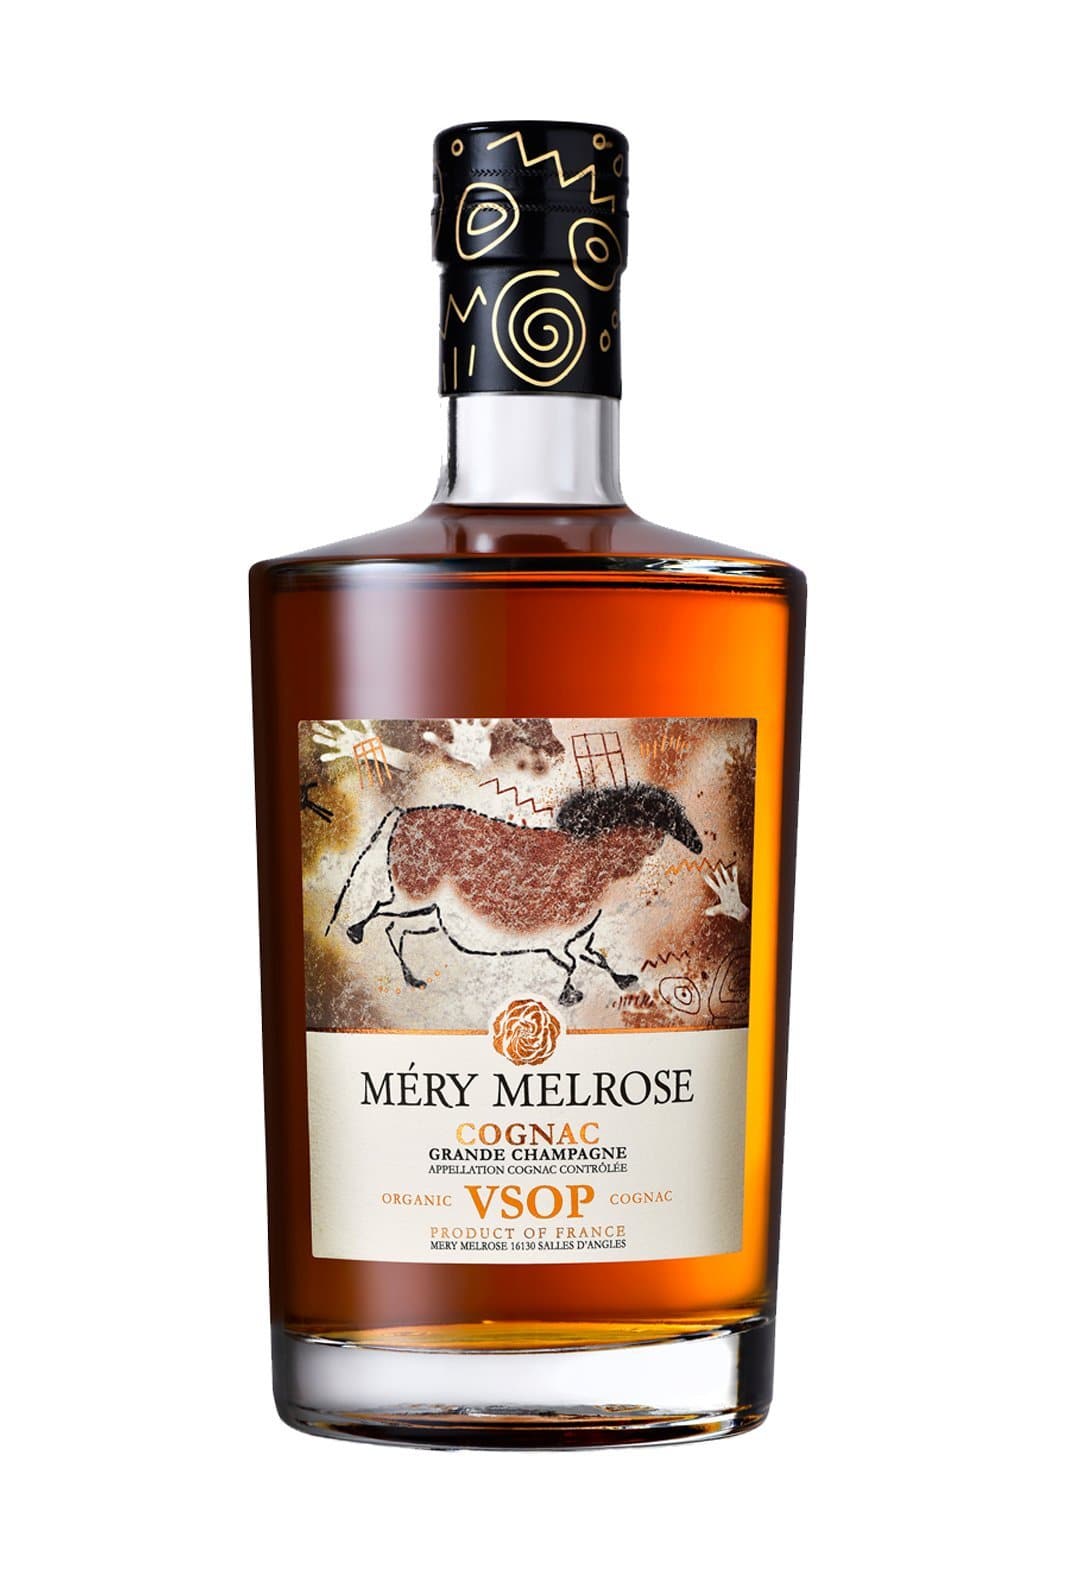 Mery Melrose VSOP Cognac Organic 40% 700ml | Brandy | Shop online at Spirits of France